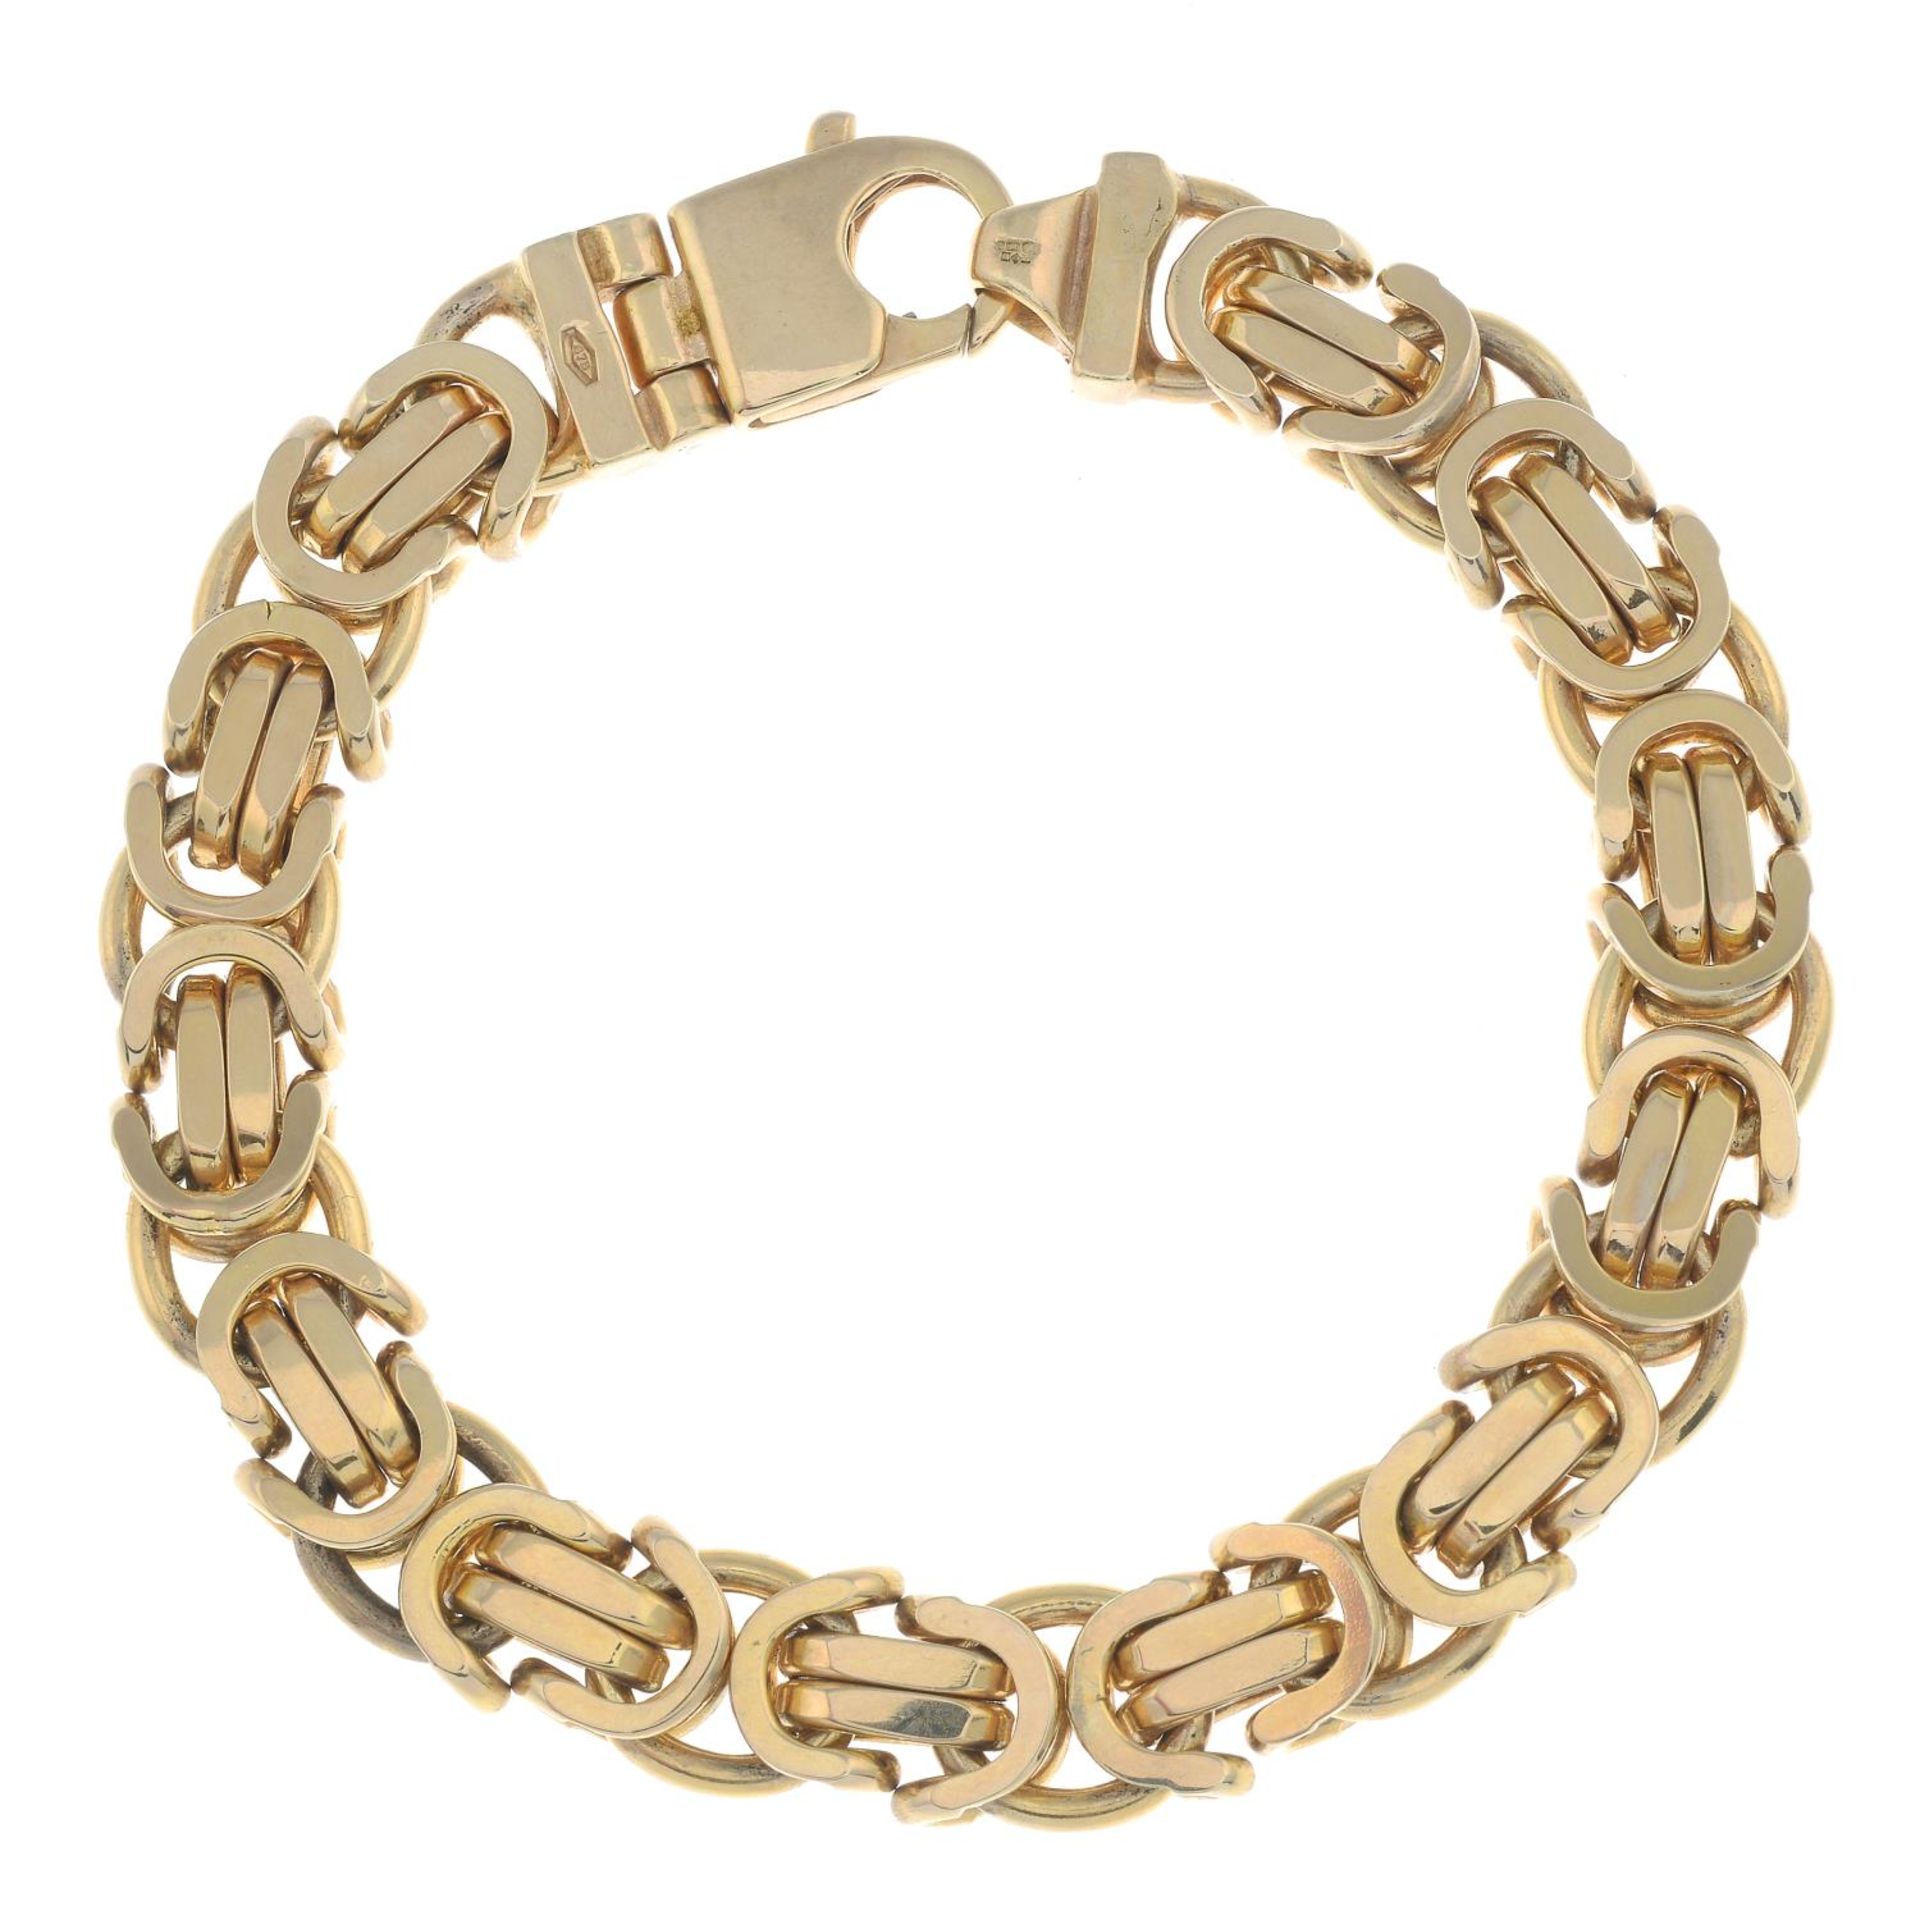 A 9ct gold bracelet.Hallmarks for 9ct gold.